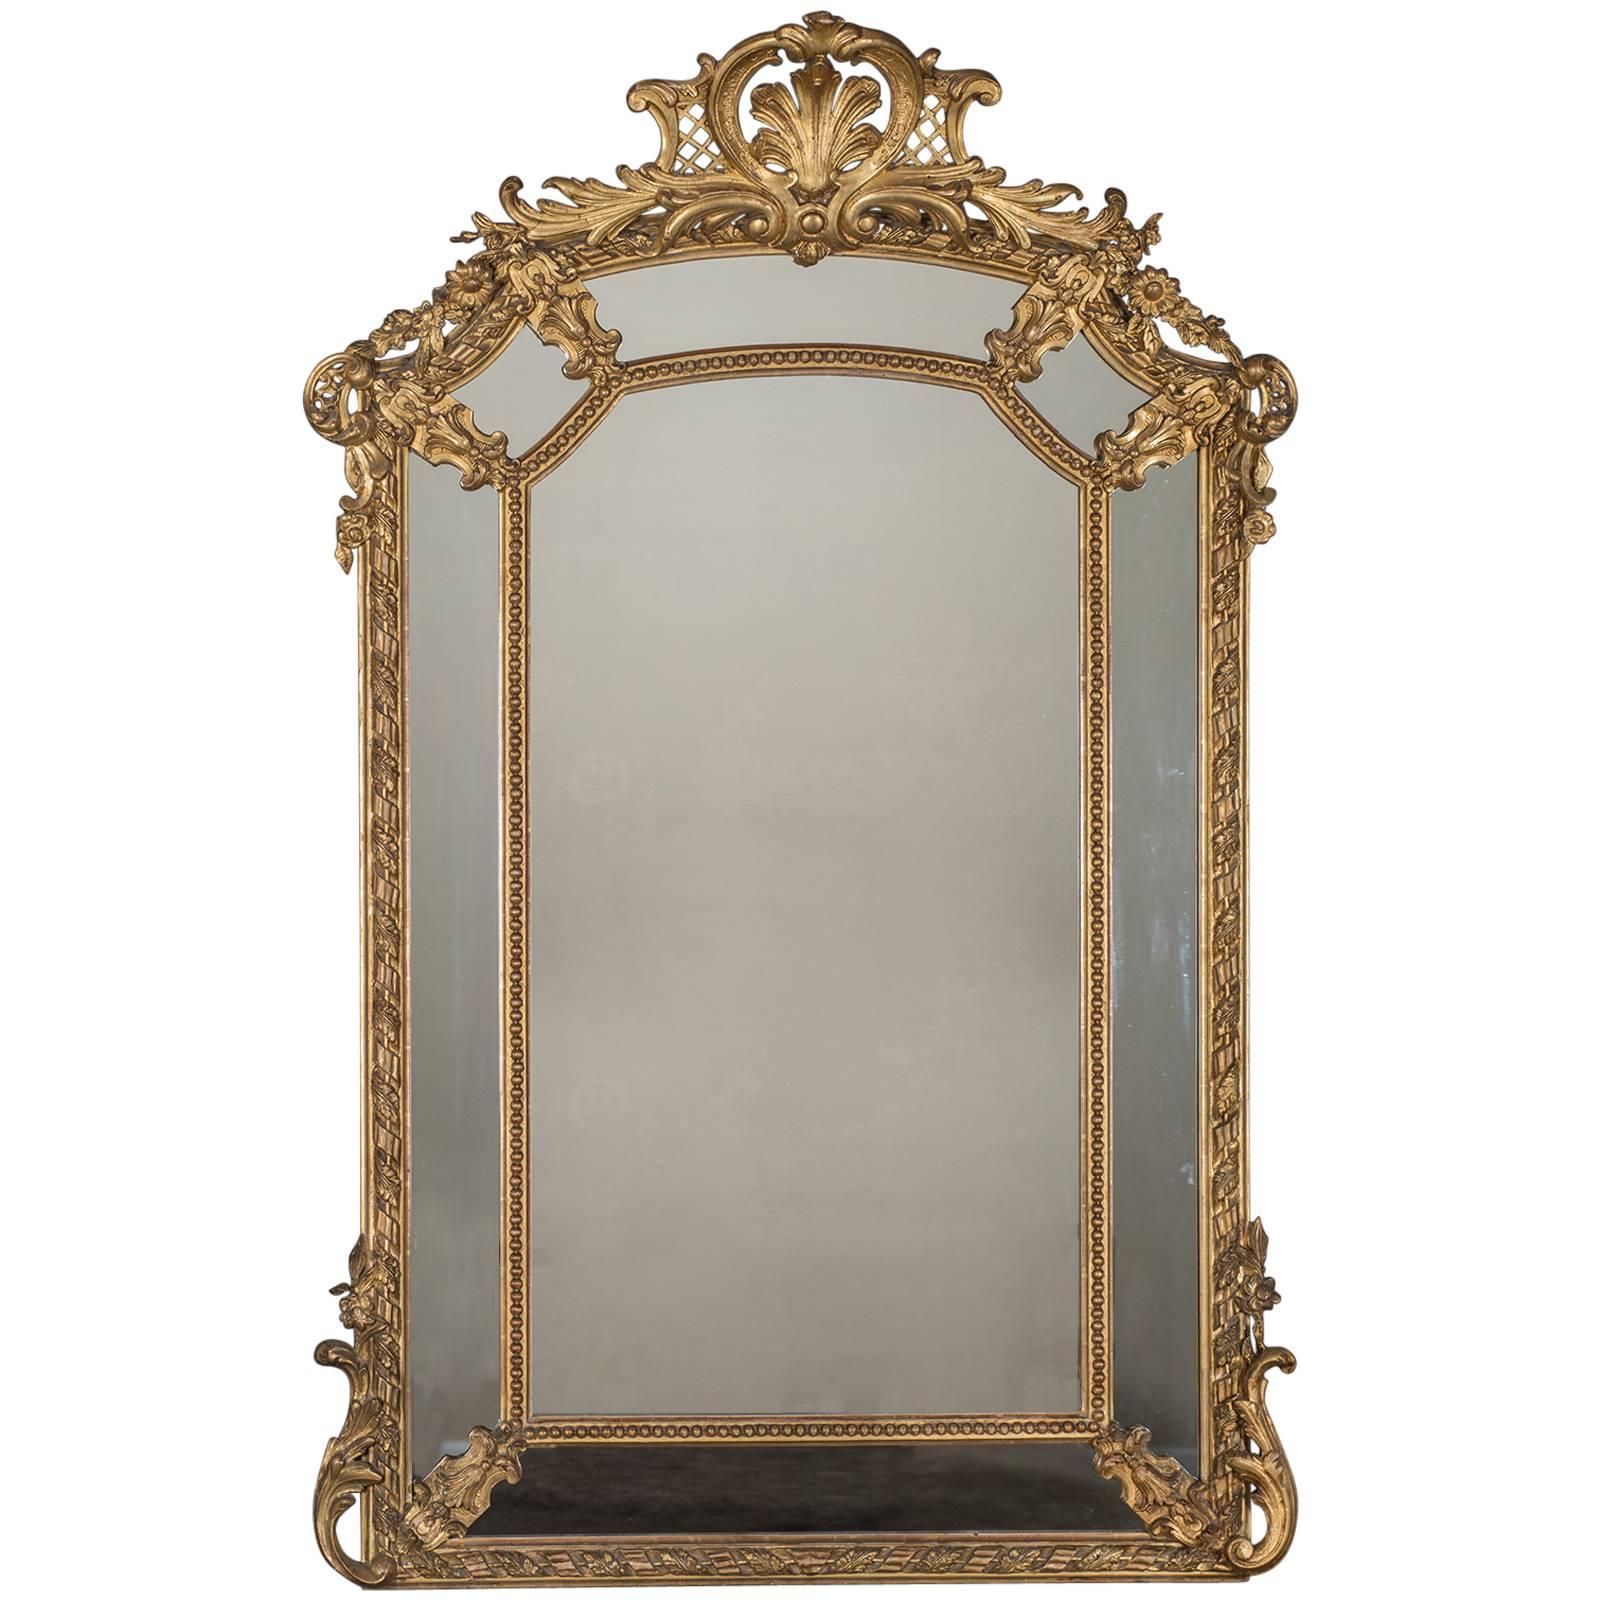 Antique French "Pareclose" Gilt and Carved Mirror, circa 1885